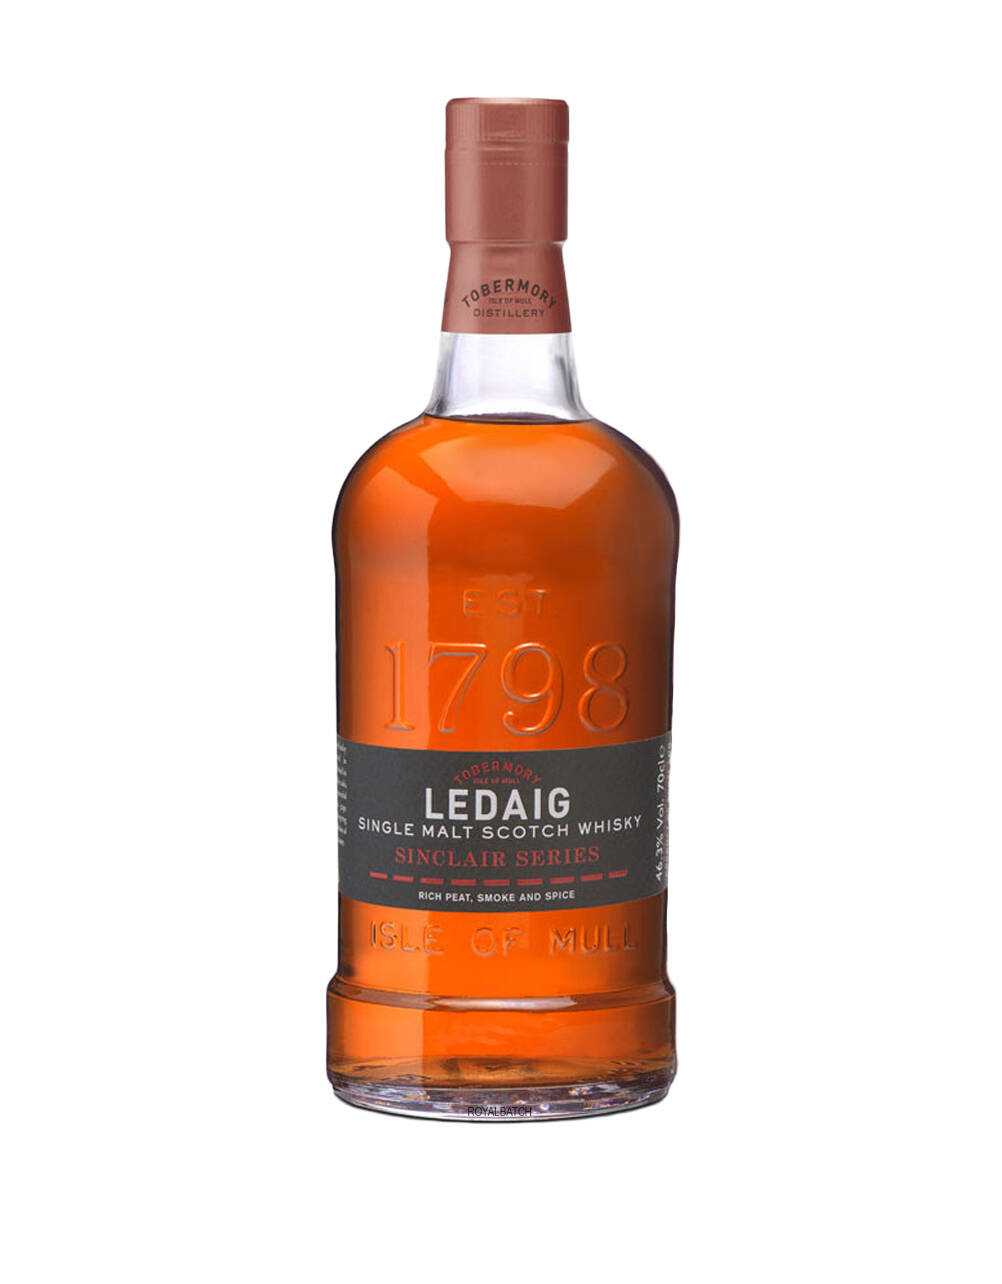 Ledaig Sinclair Series Isle of Mule Rioja Cask Finish Single Malt Scotch Whisky